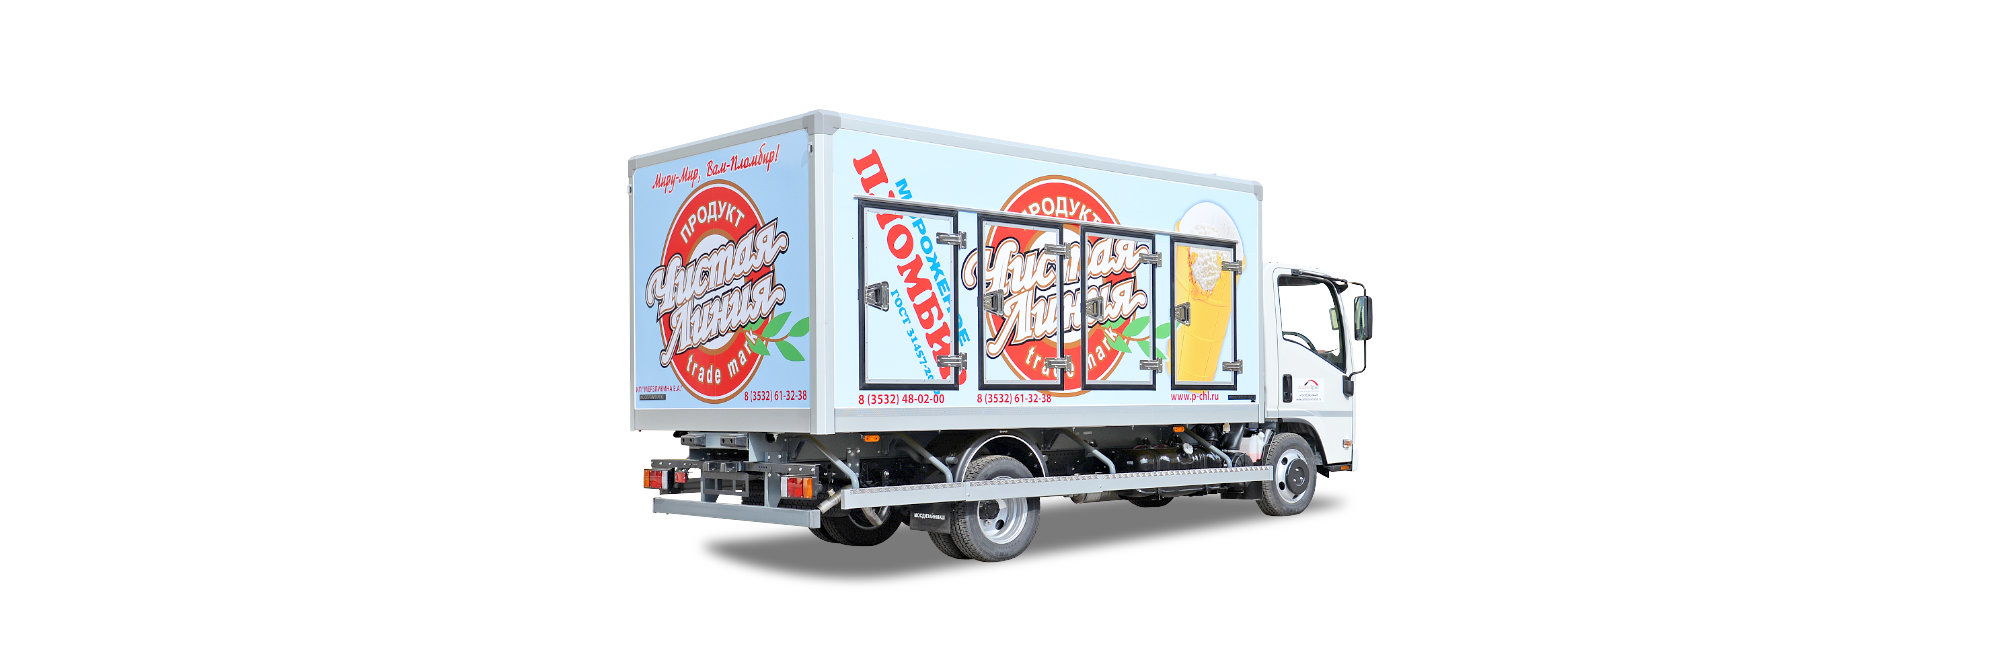 Oecopan Ticari Araç CTP levha Chisnaya Liniya dondurma kamyon kasa üretimi